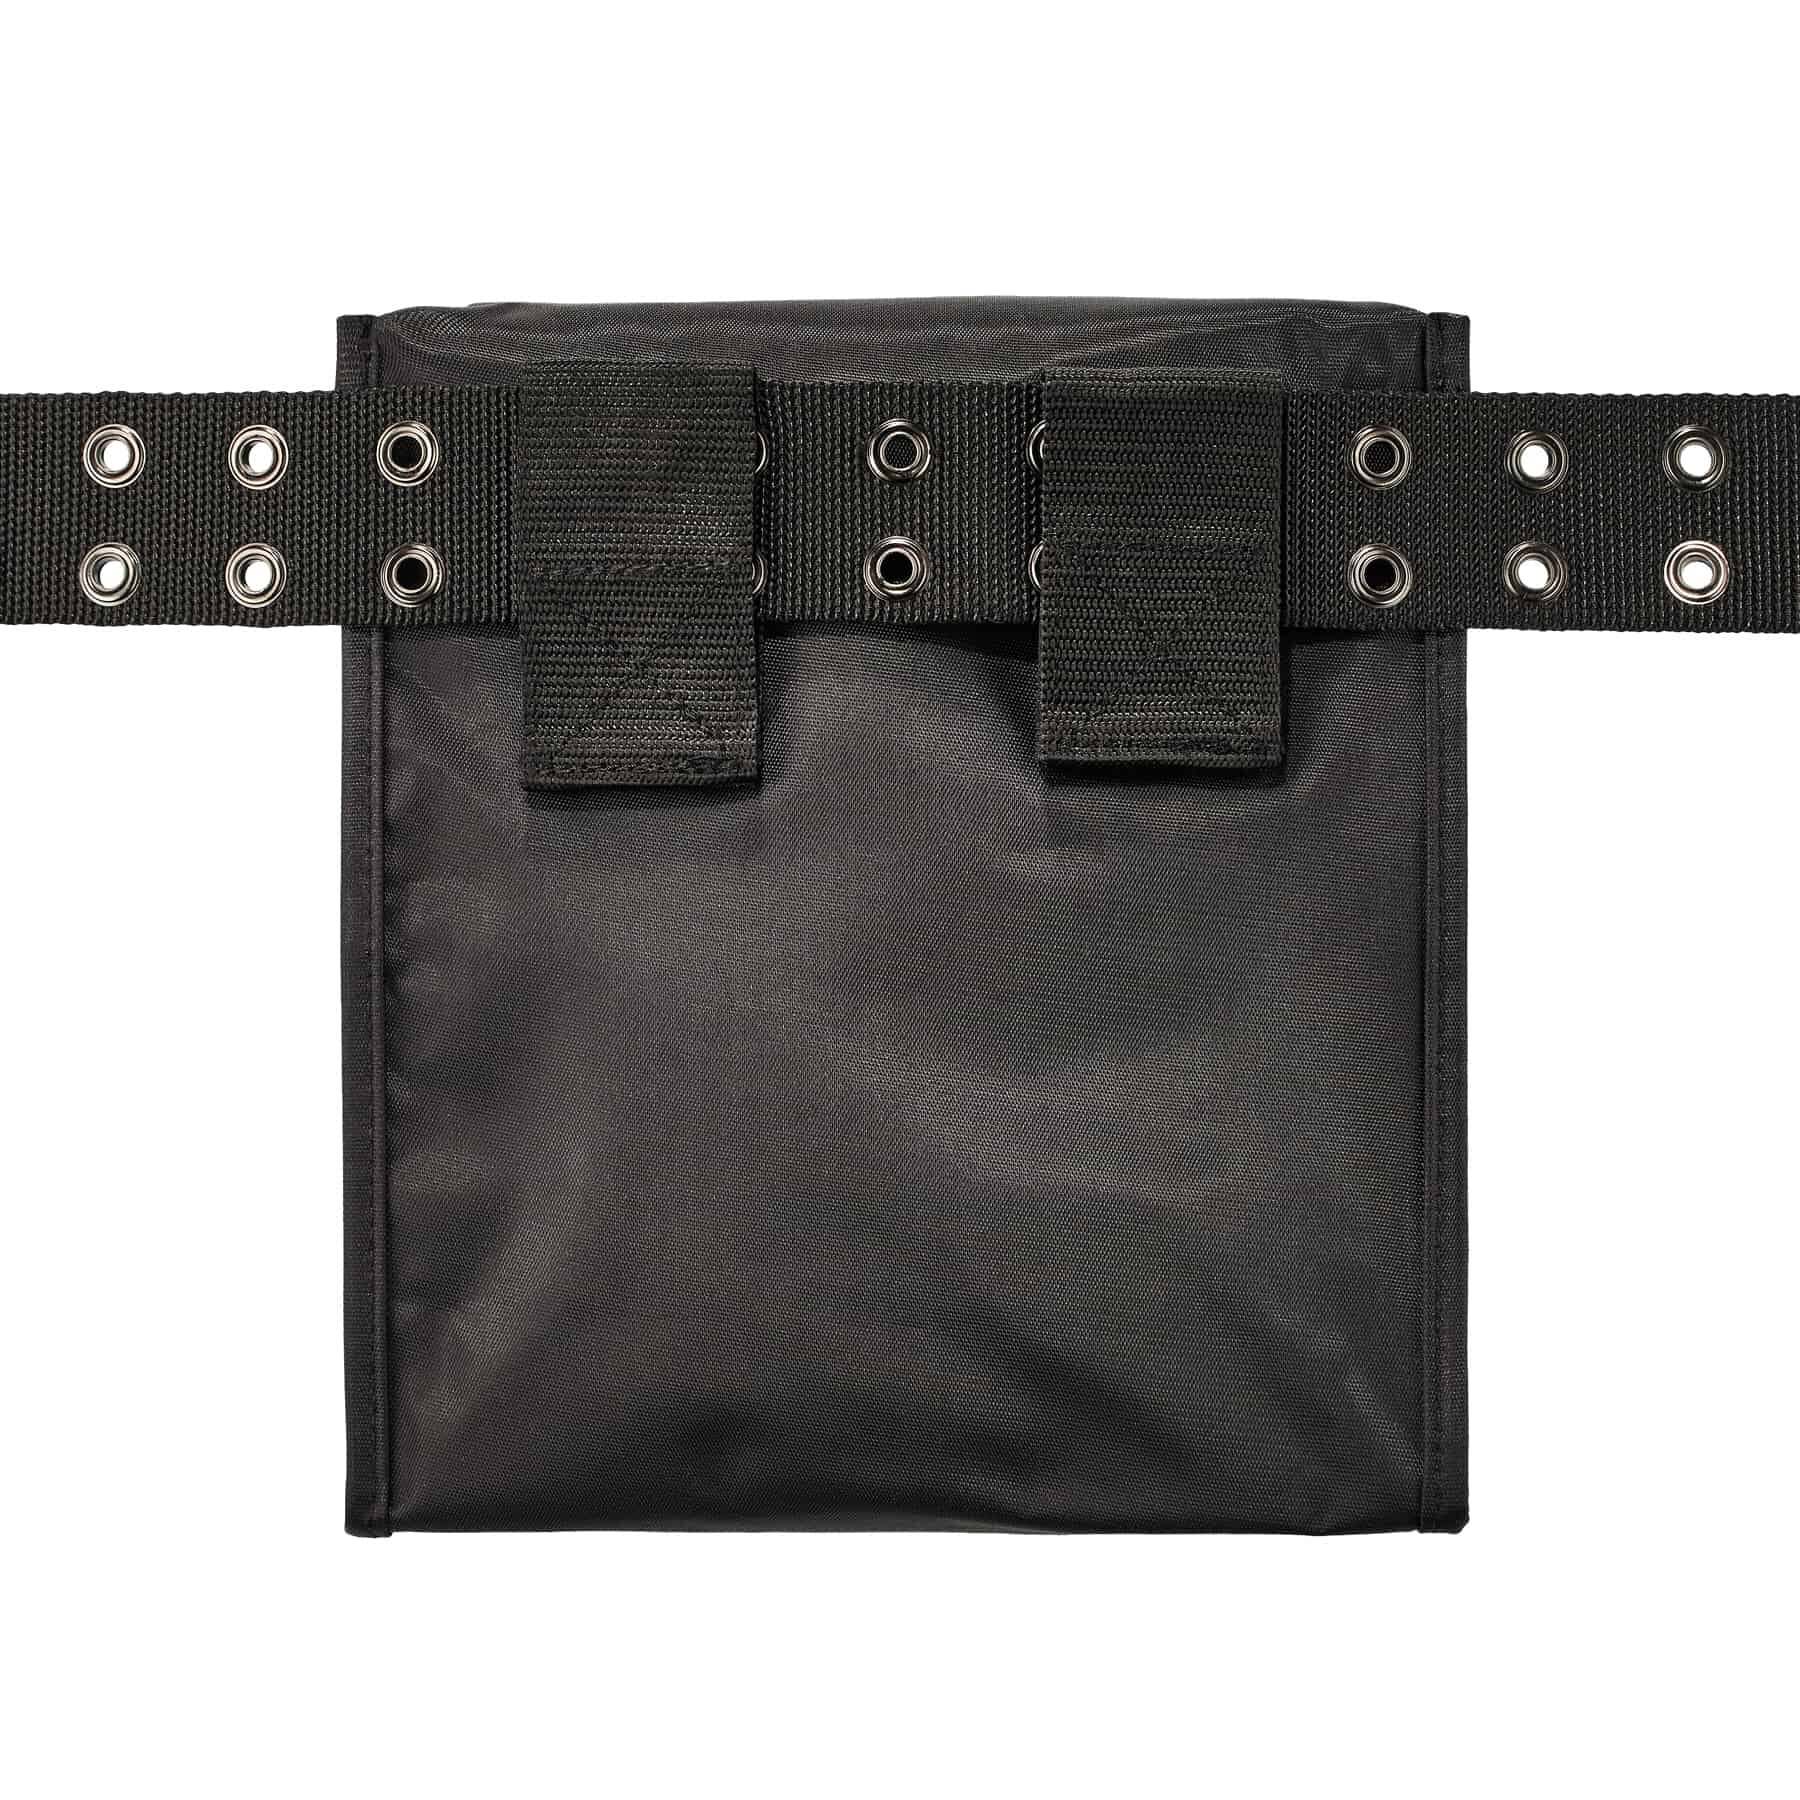 Full Face Respirator Bag - Zipper Magnetic